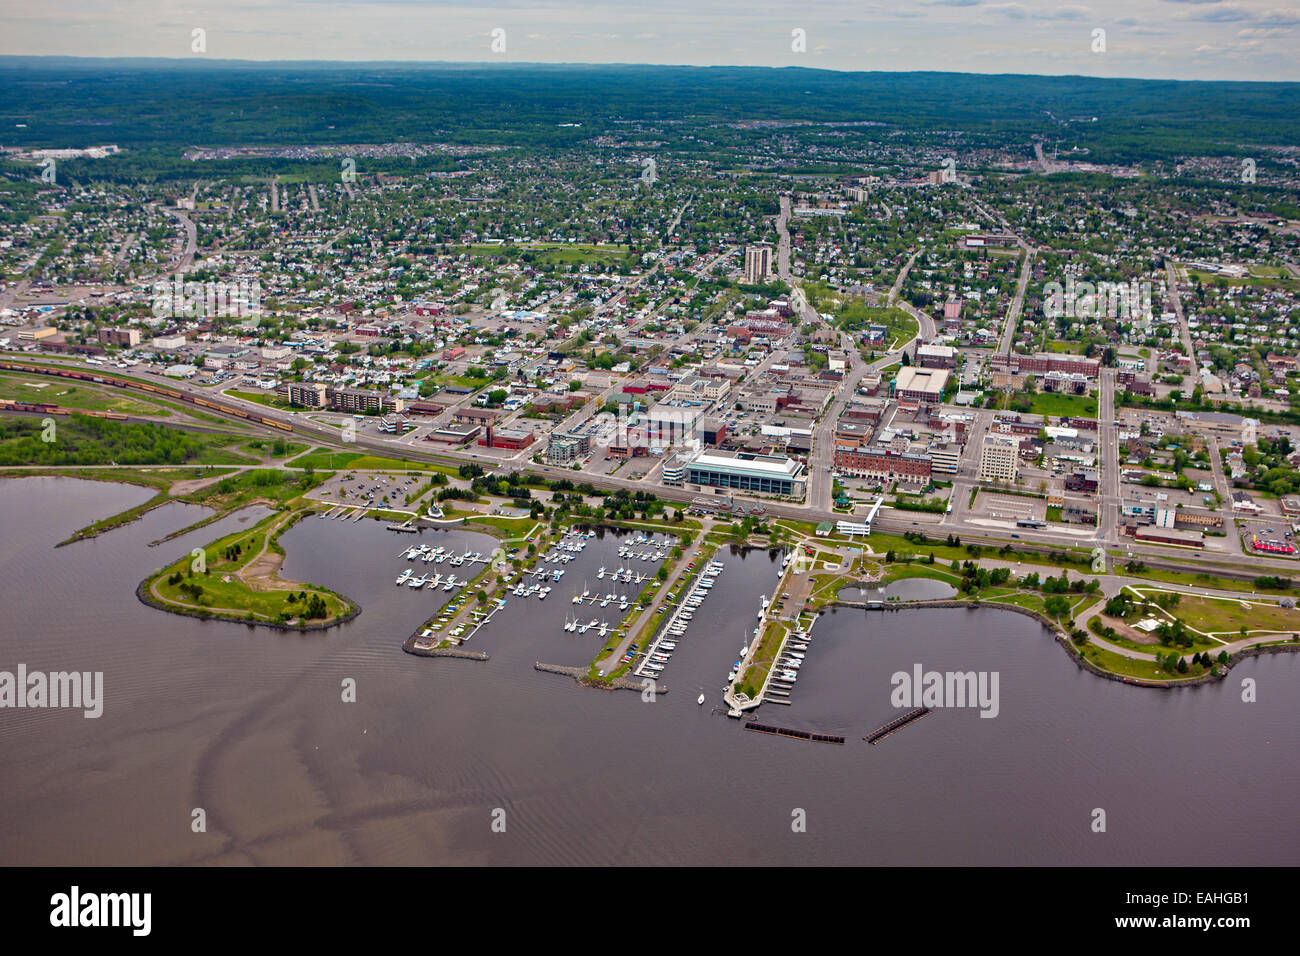 Marina et front de mer dans la ville de Thunder Bay, Ontario, Canada. Banque D'Images